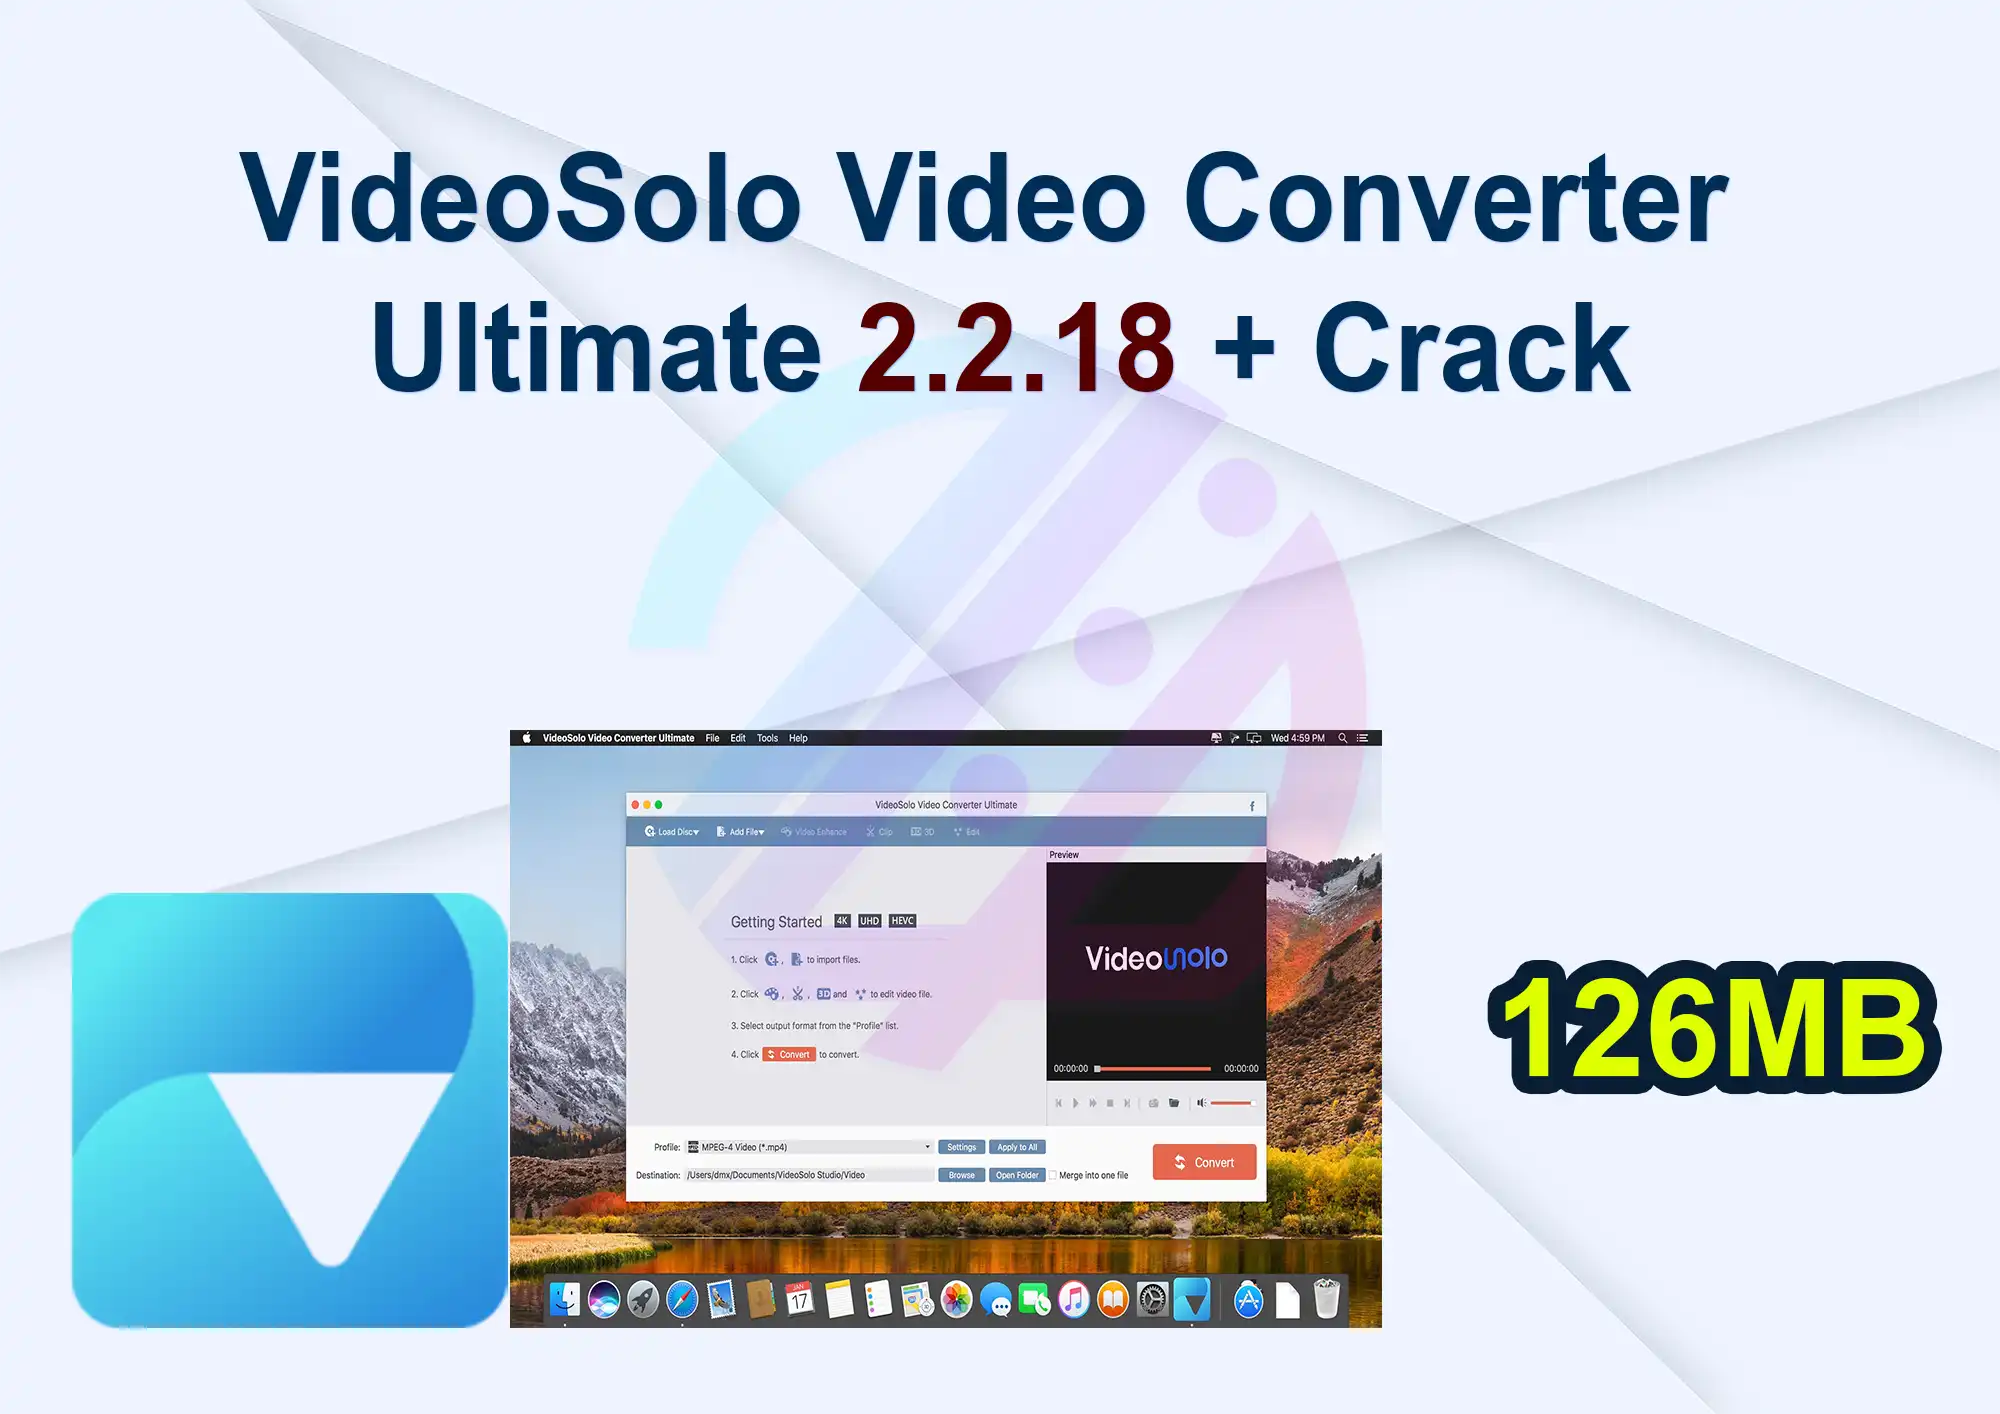 VideoSolo Video Converter Ultimate 2.2.18 + Crack